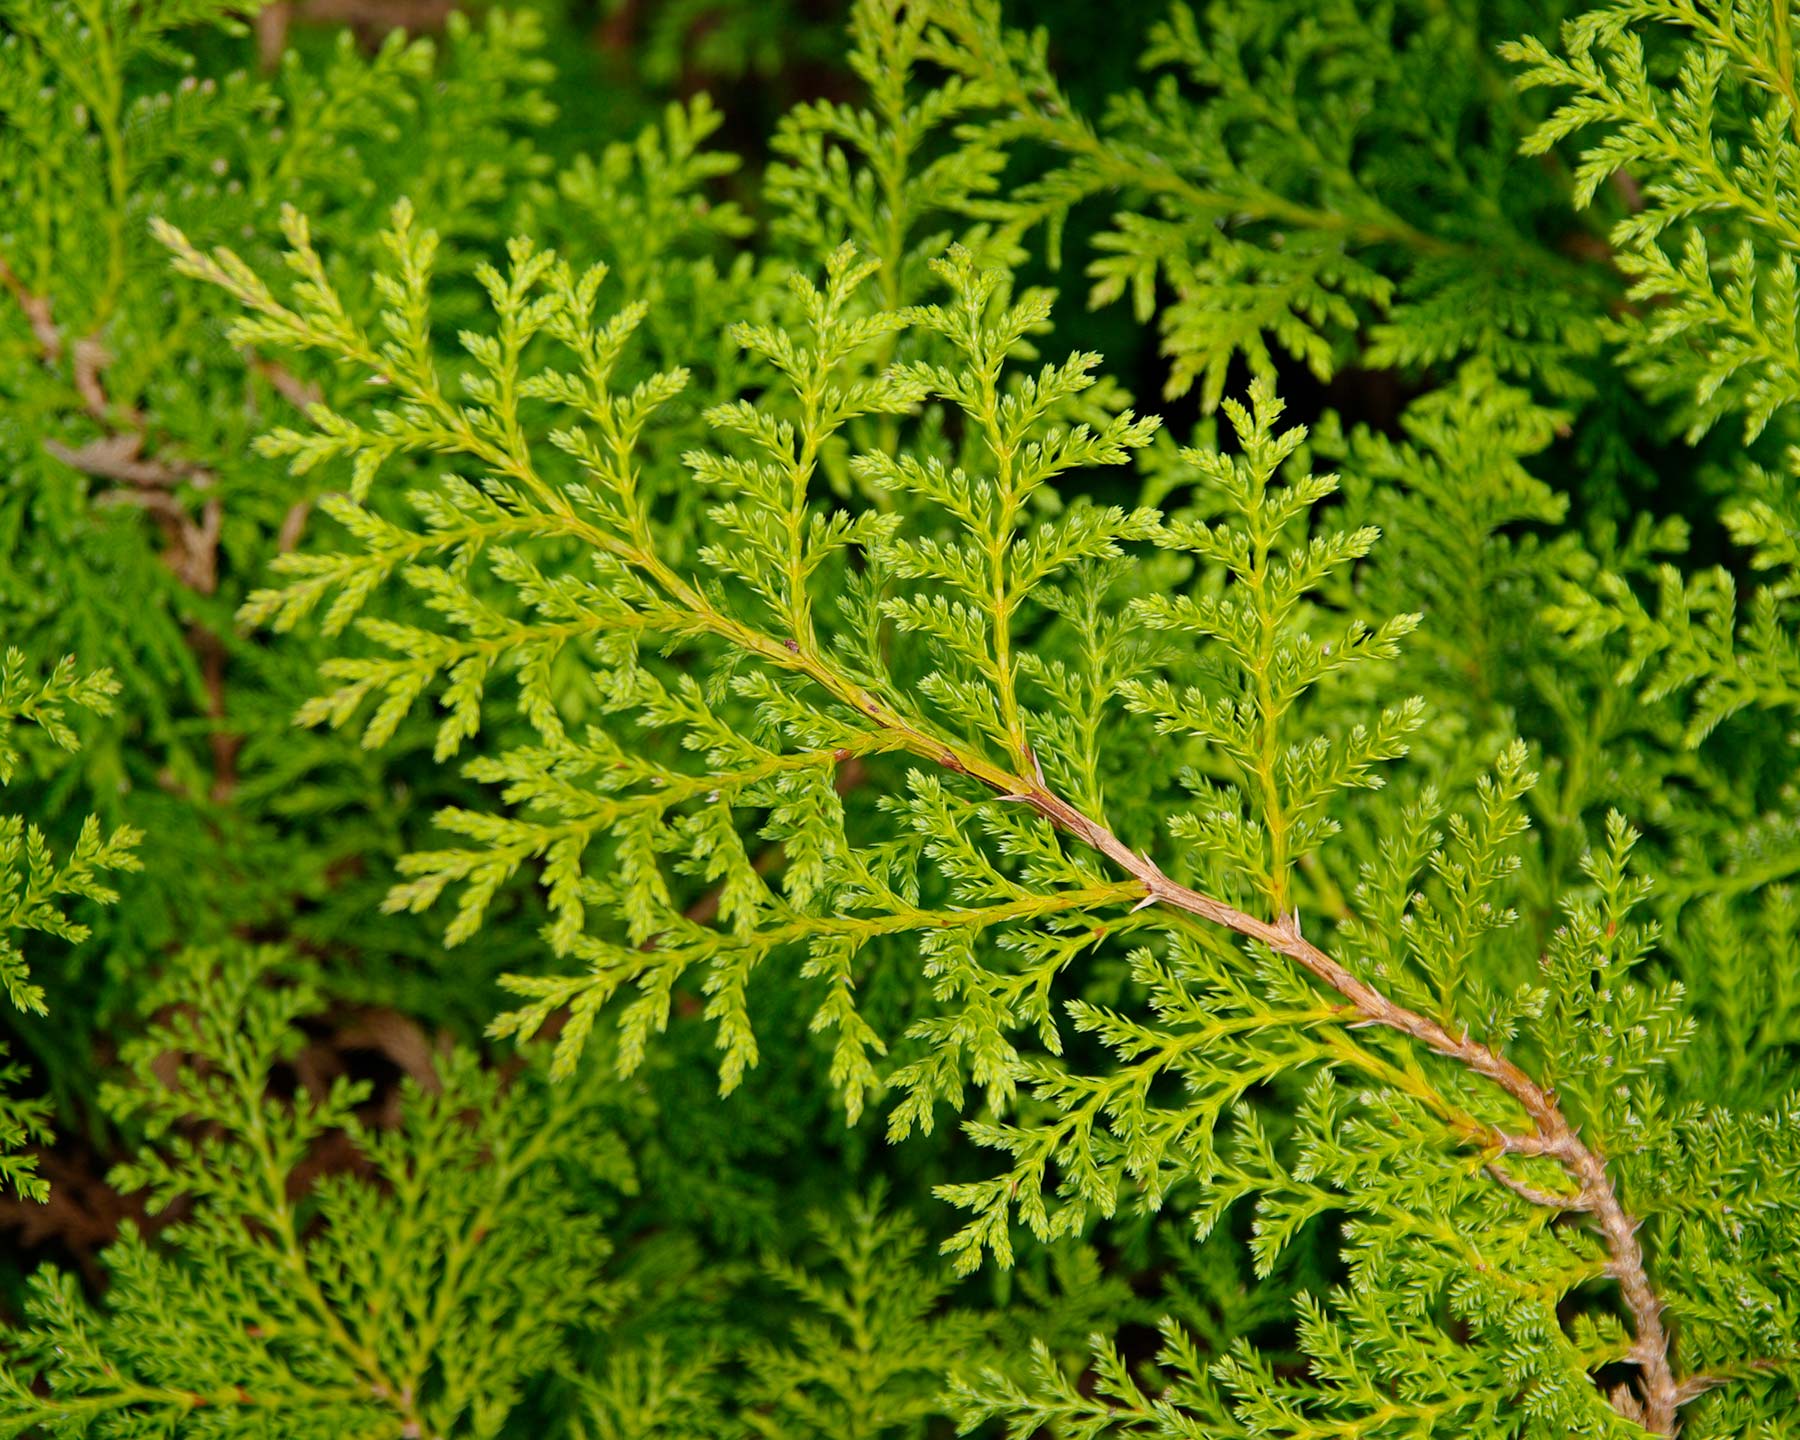 Chamaecyparis obtusa Nana foliage